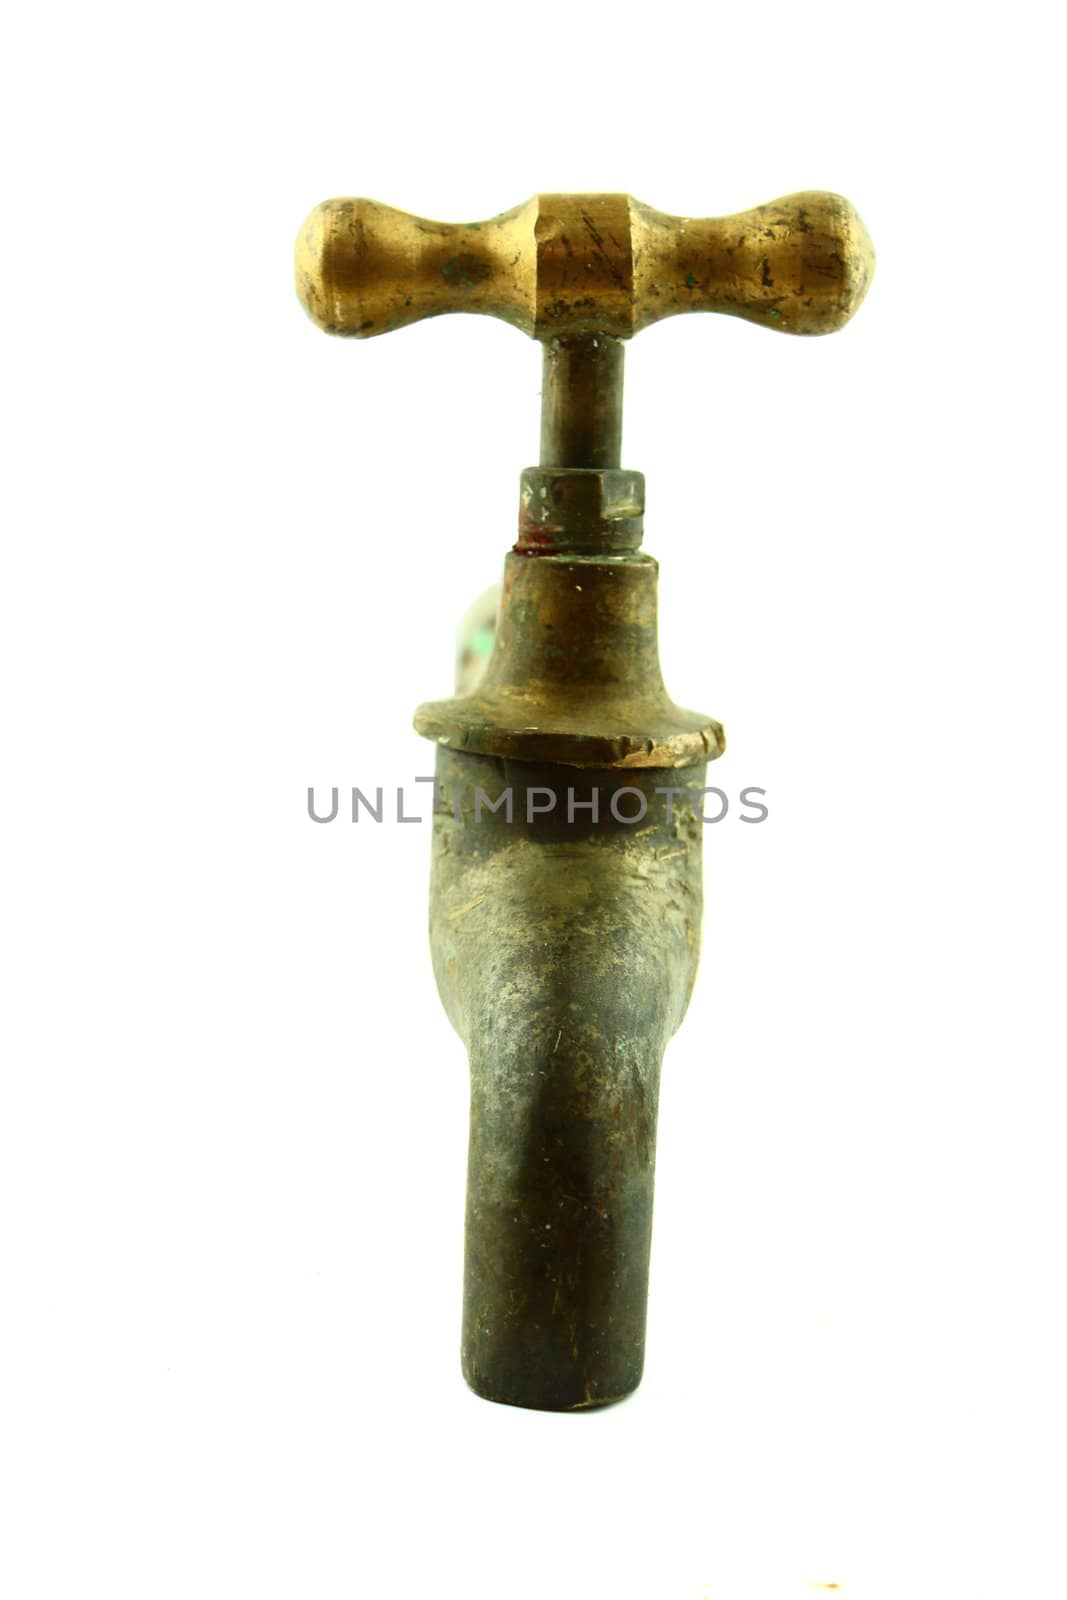 brass water tap by designsstock